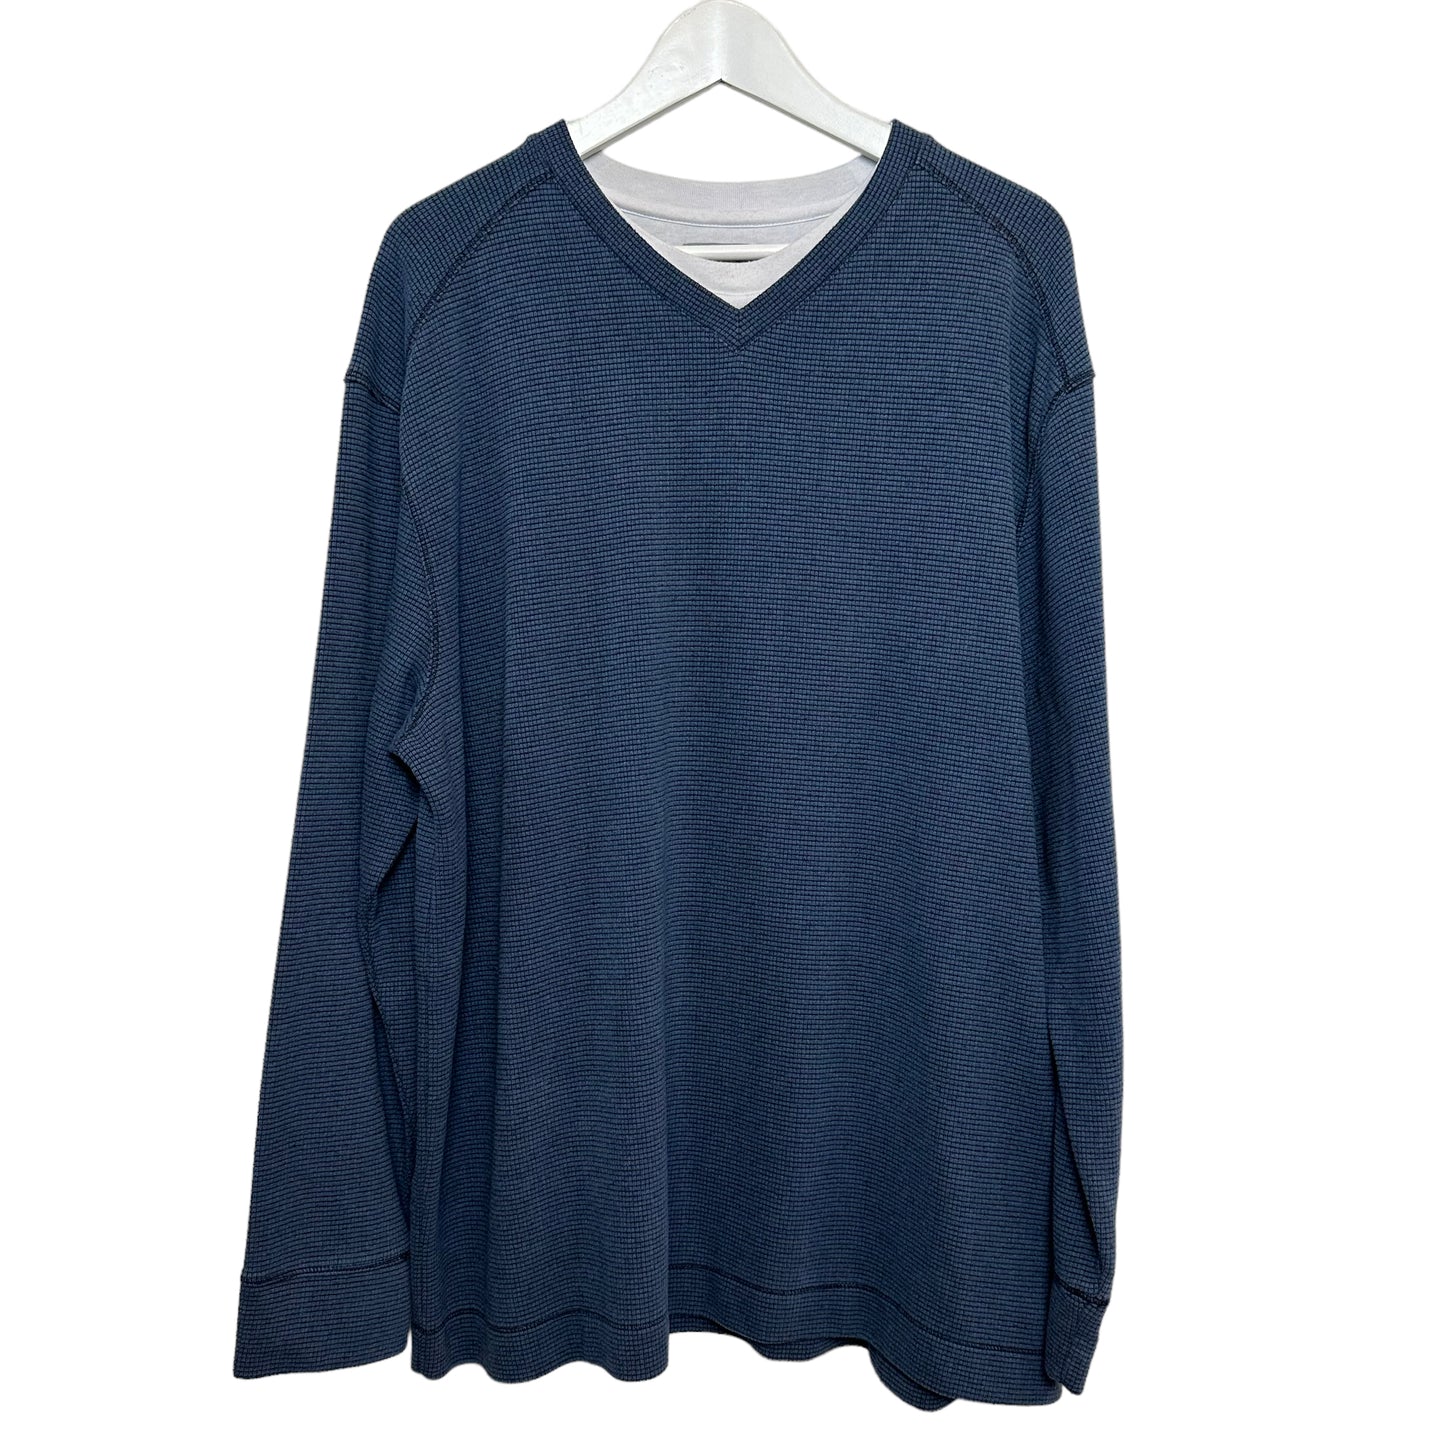 Retro 90s Style Method Double Layered Long Sleeve T-Shirt Navy Blue XL